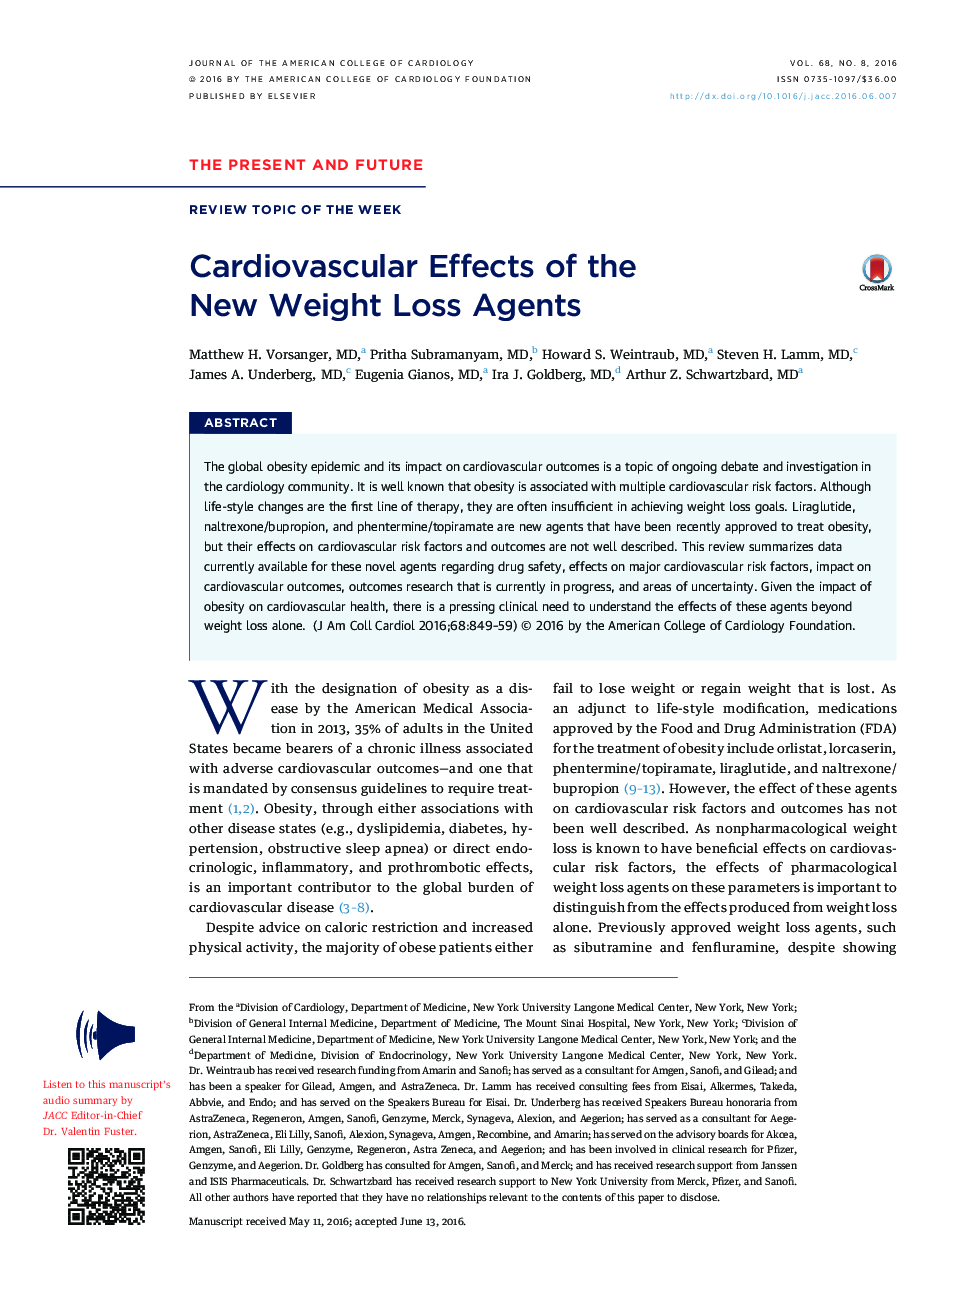 تأثیرات قلب و عروق عوامل کاهش وزن جدید 